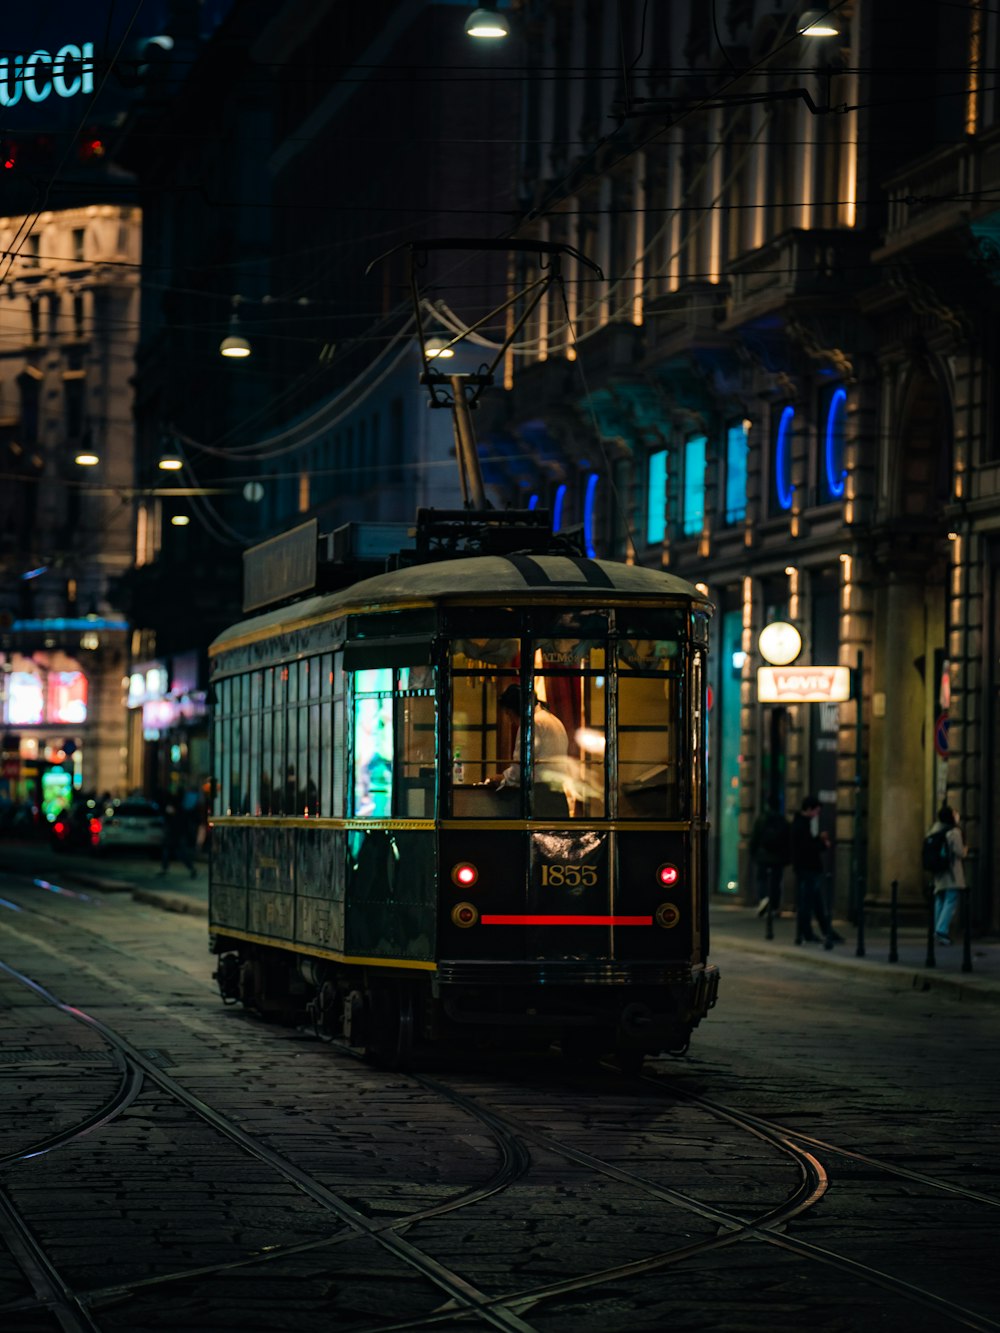 a trolley car on a city street at night